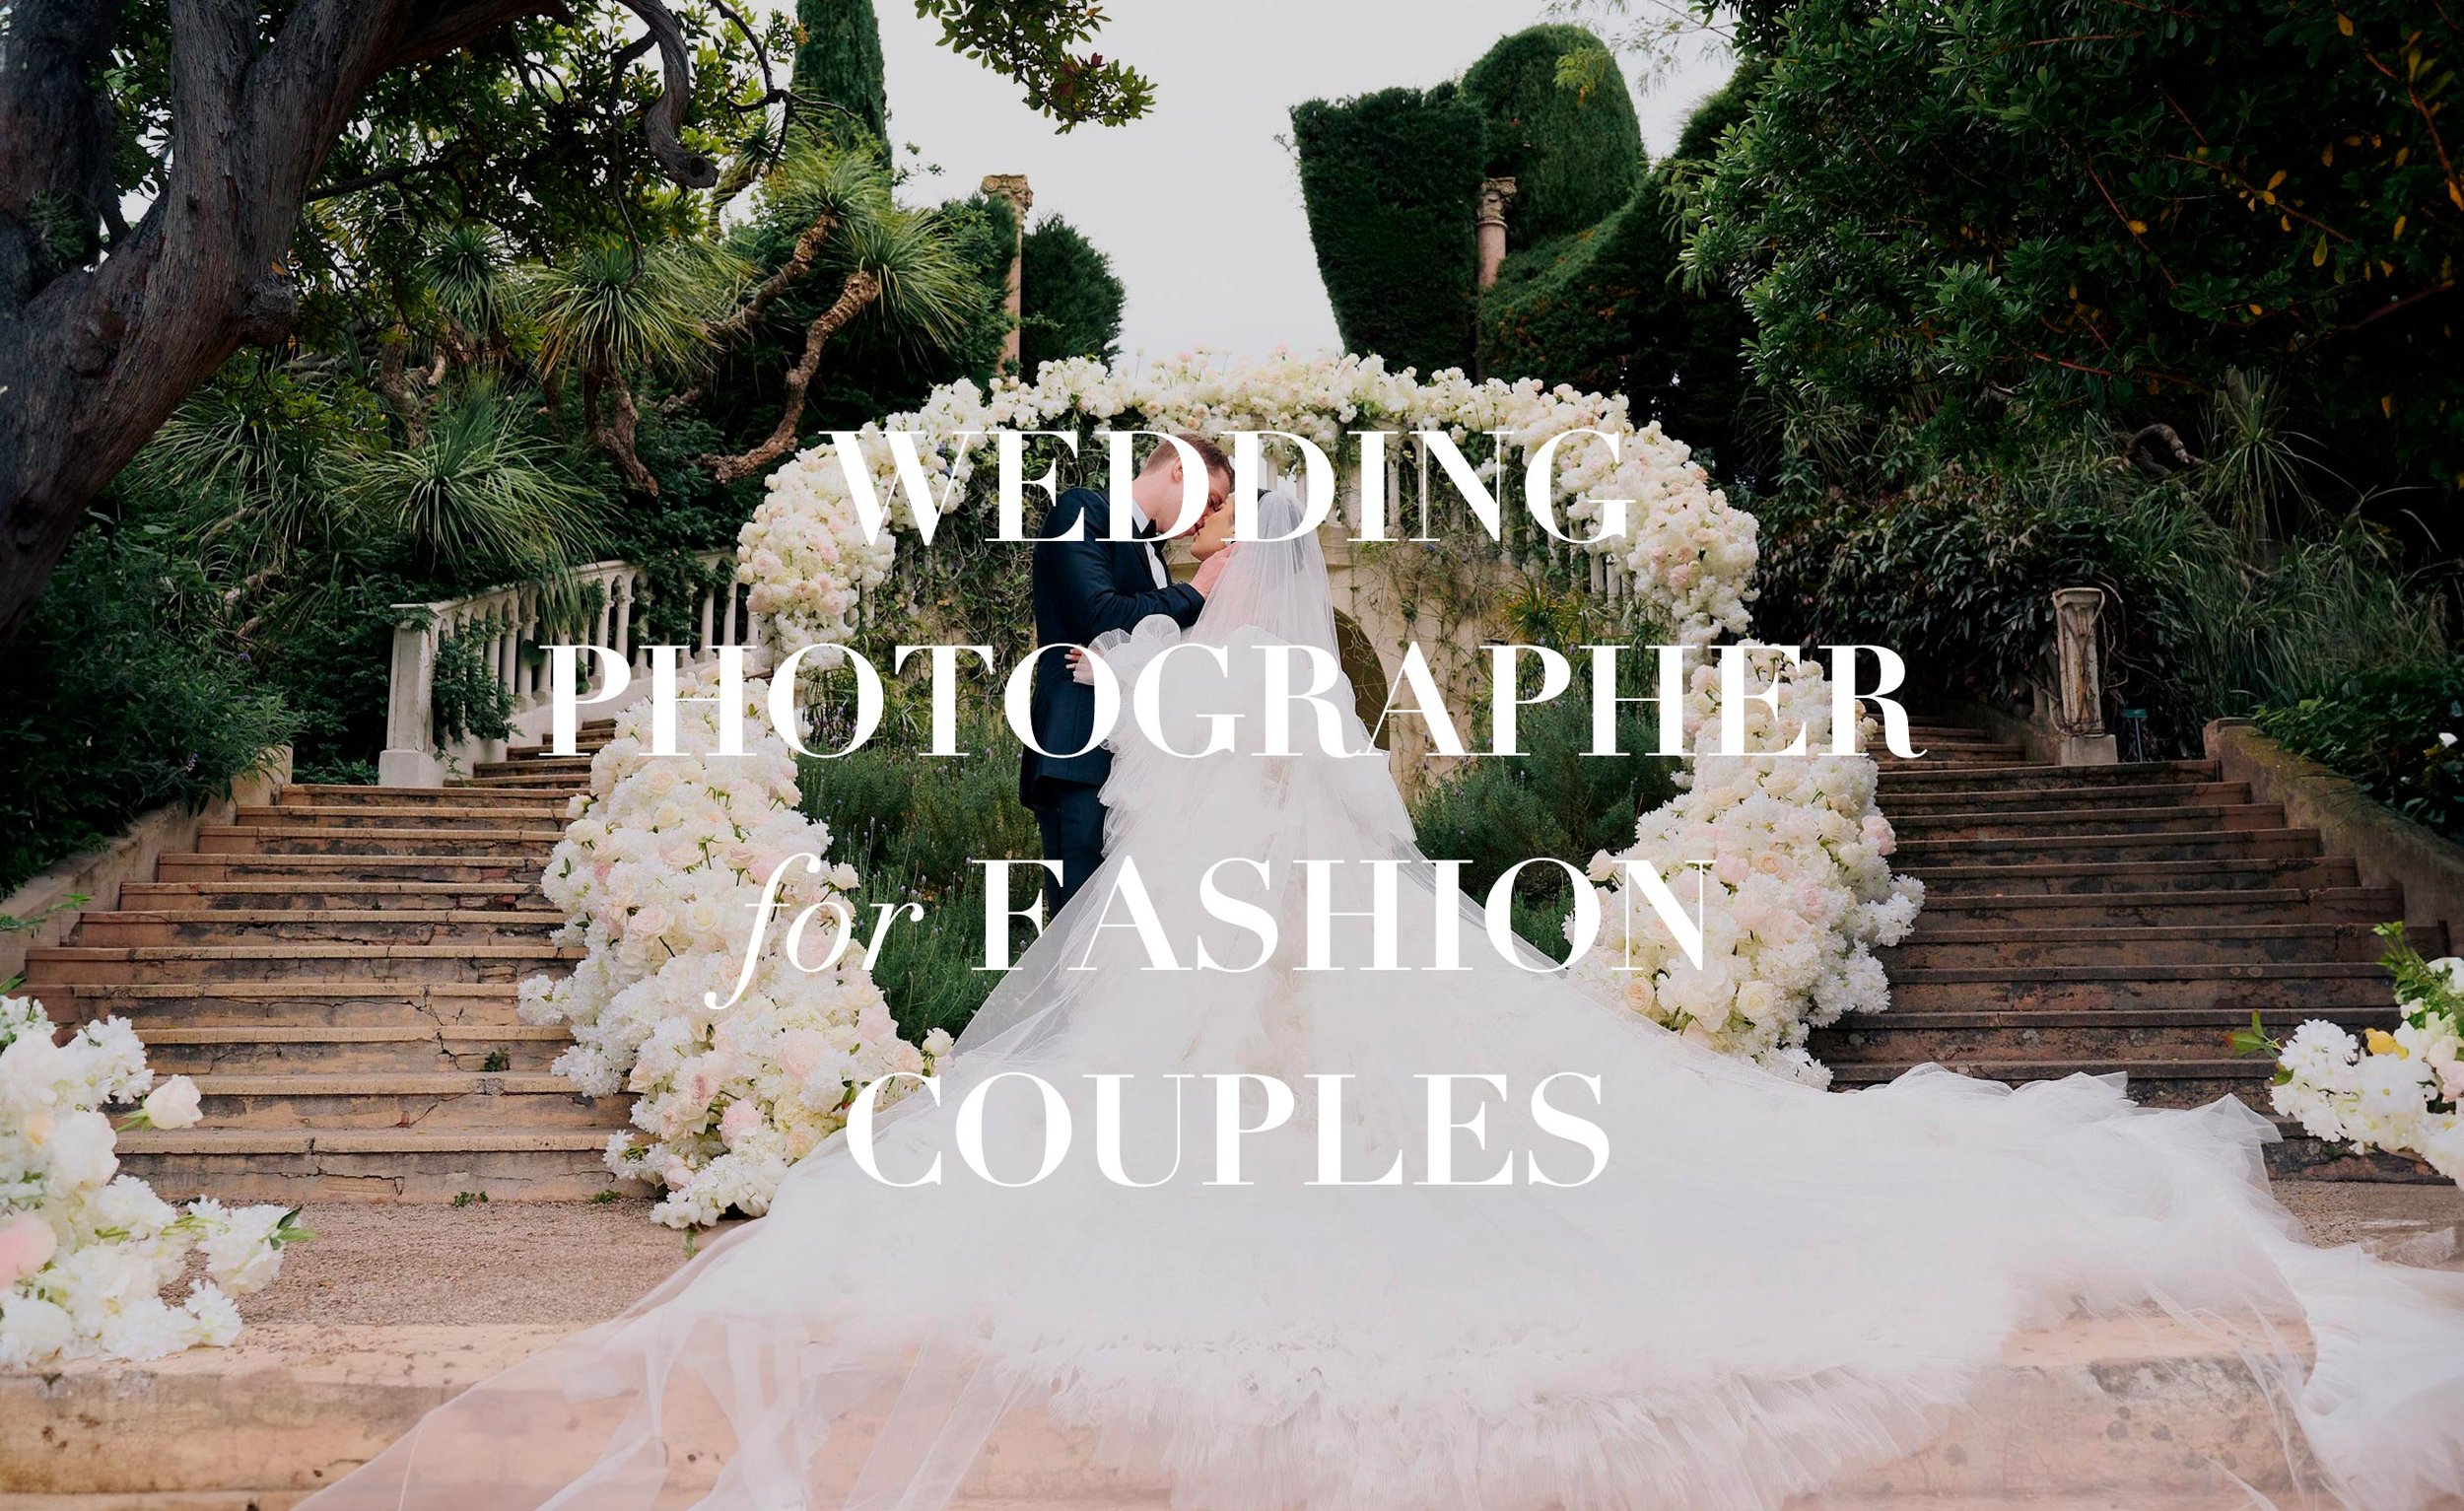 David_picchio_fashion_wedding_photographer_couple_paris_france_elopment_homepage_07a.jpg